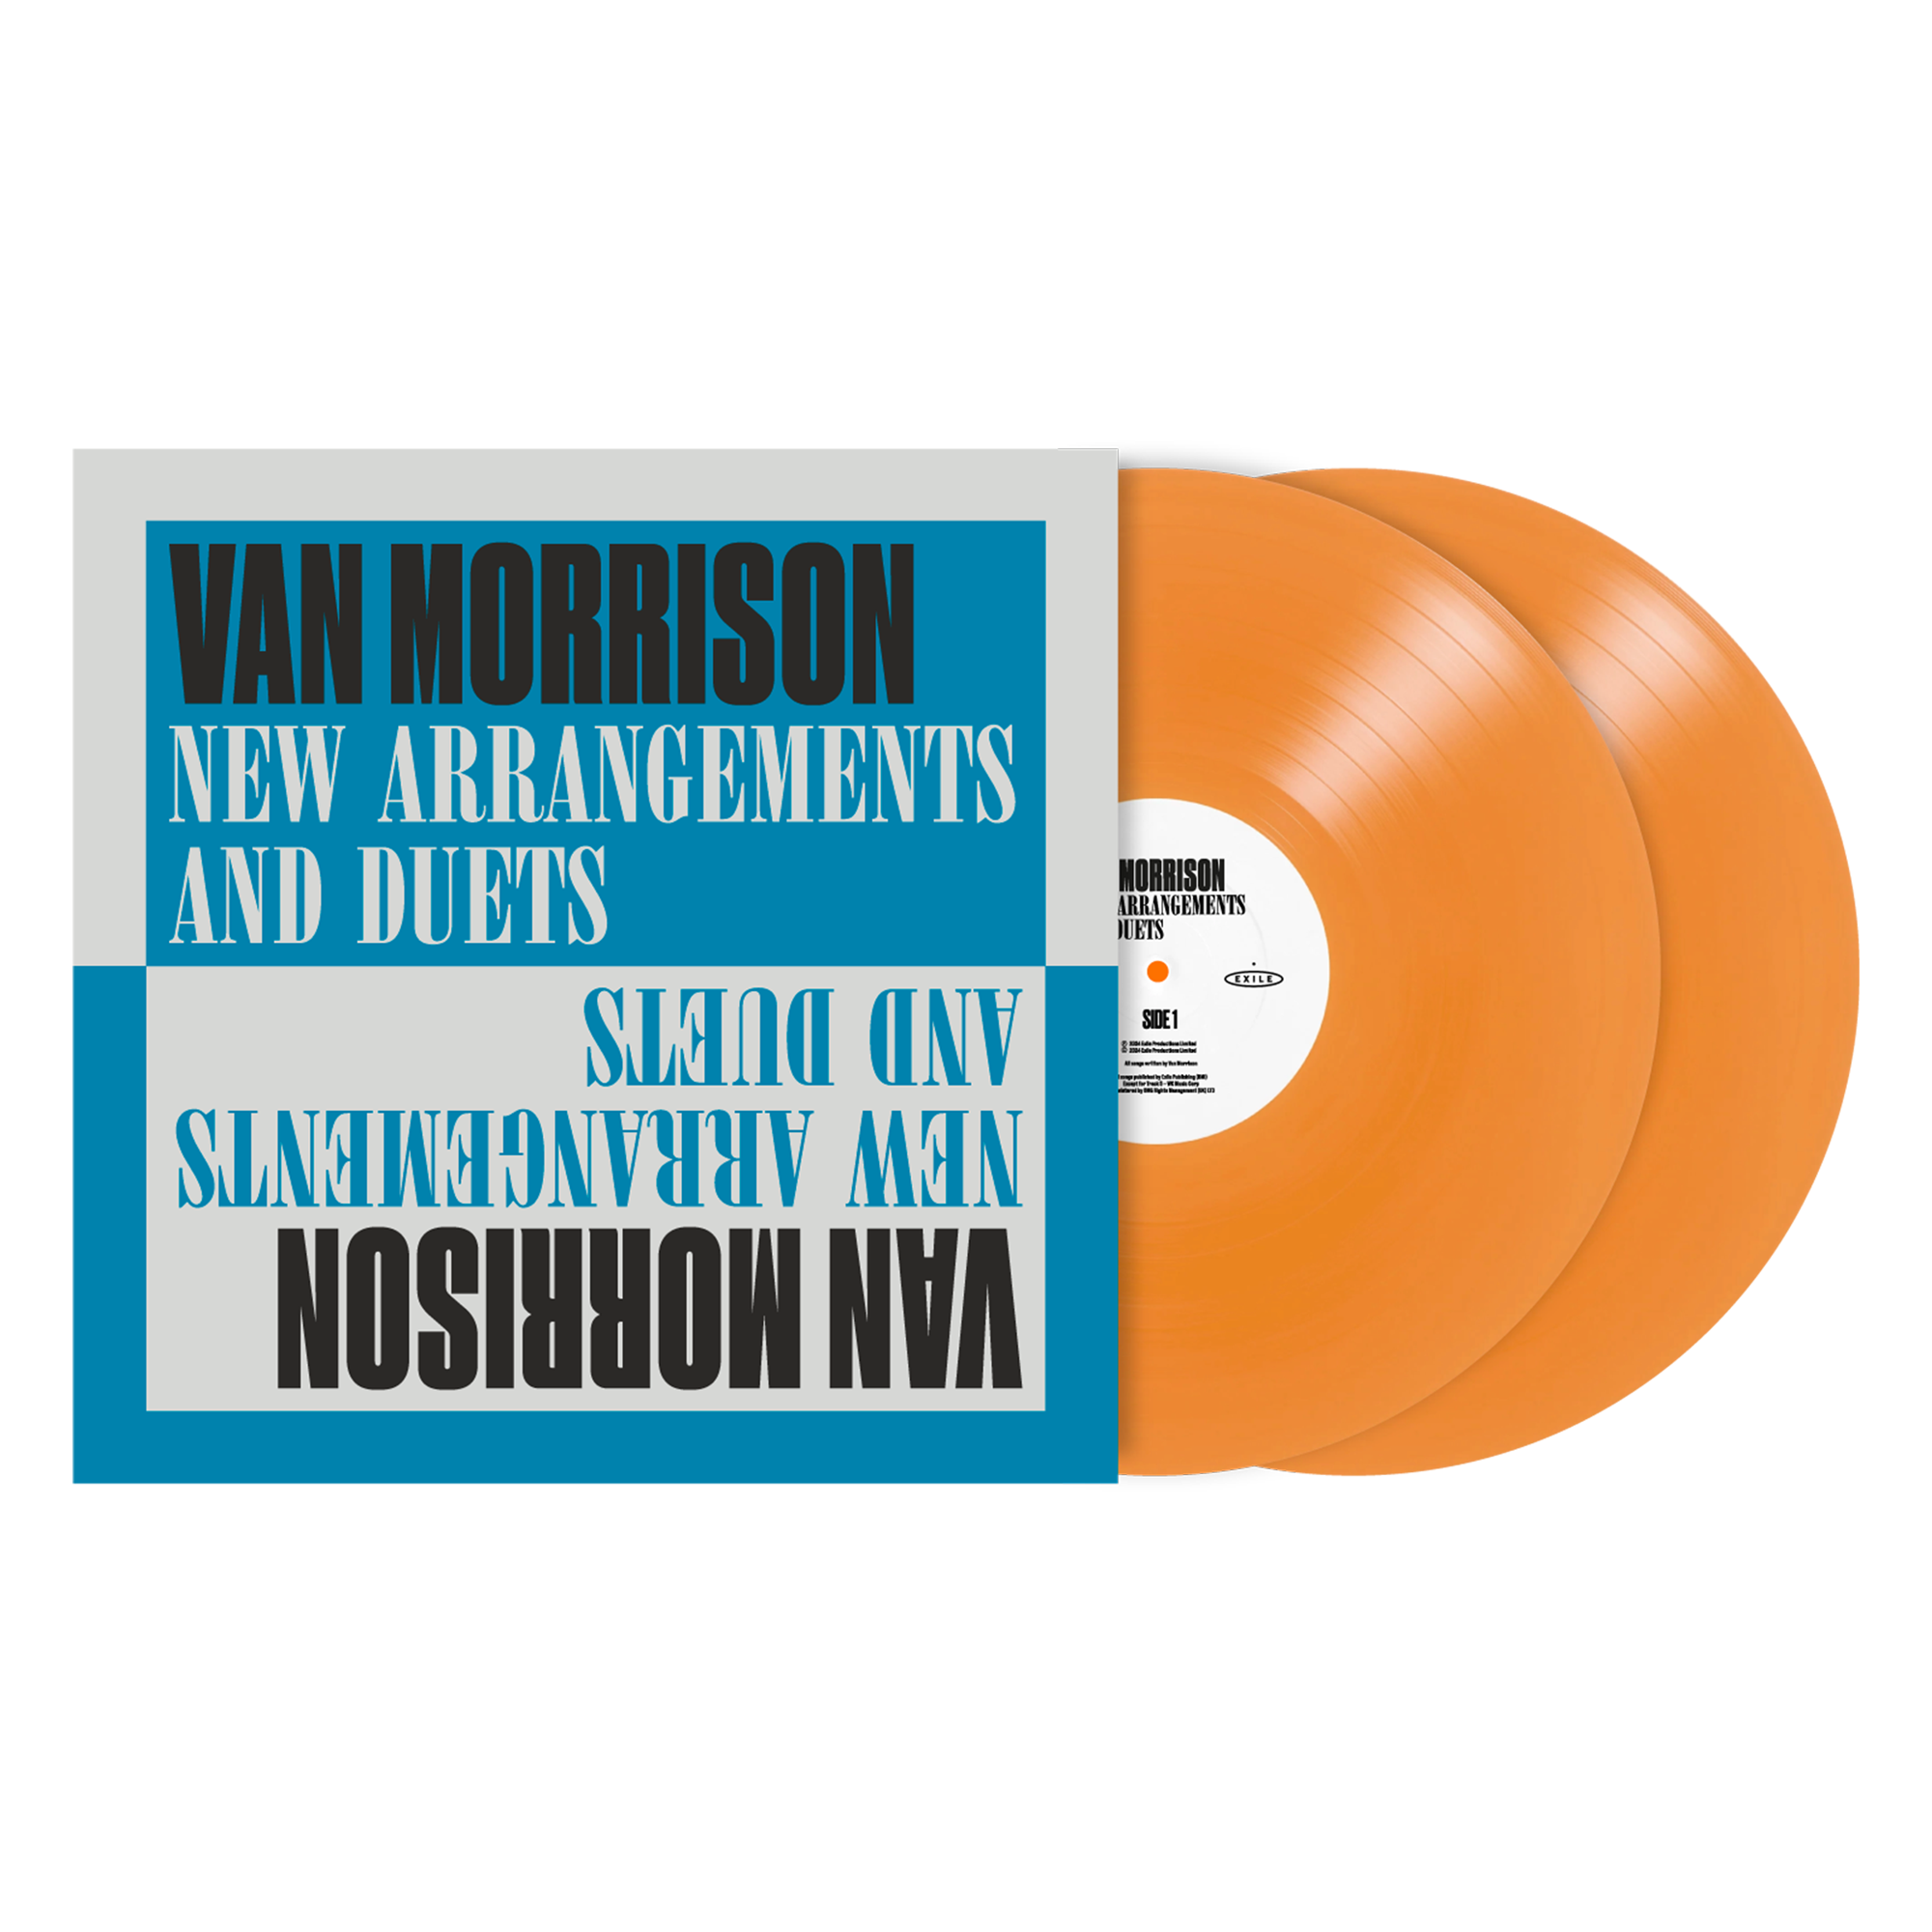 New Arrangements And Duets: Limited Orange Vinyl LP + Signed Print